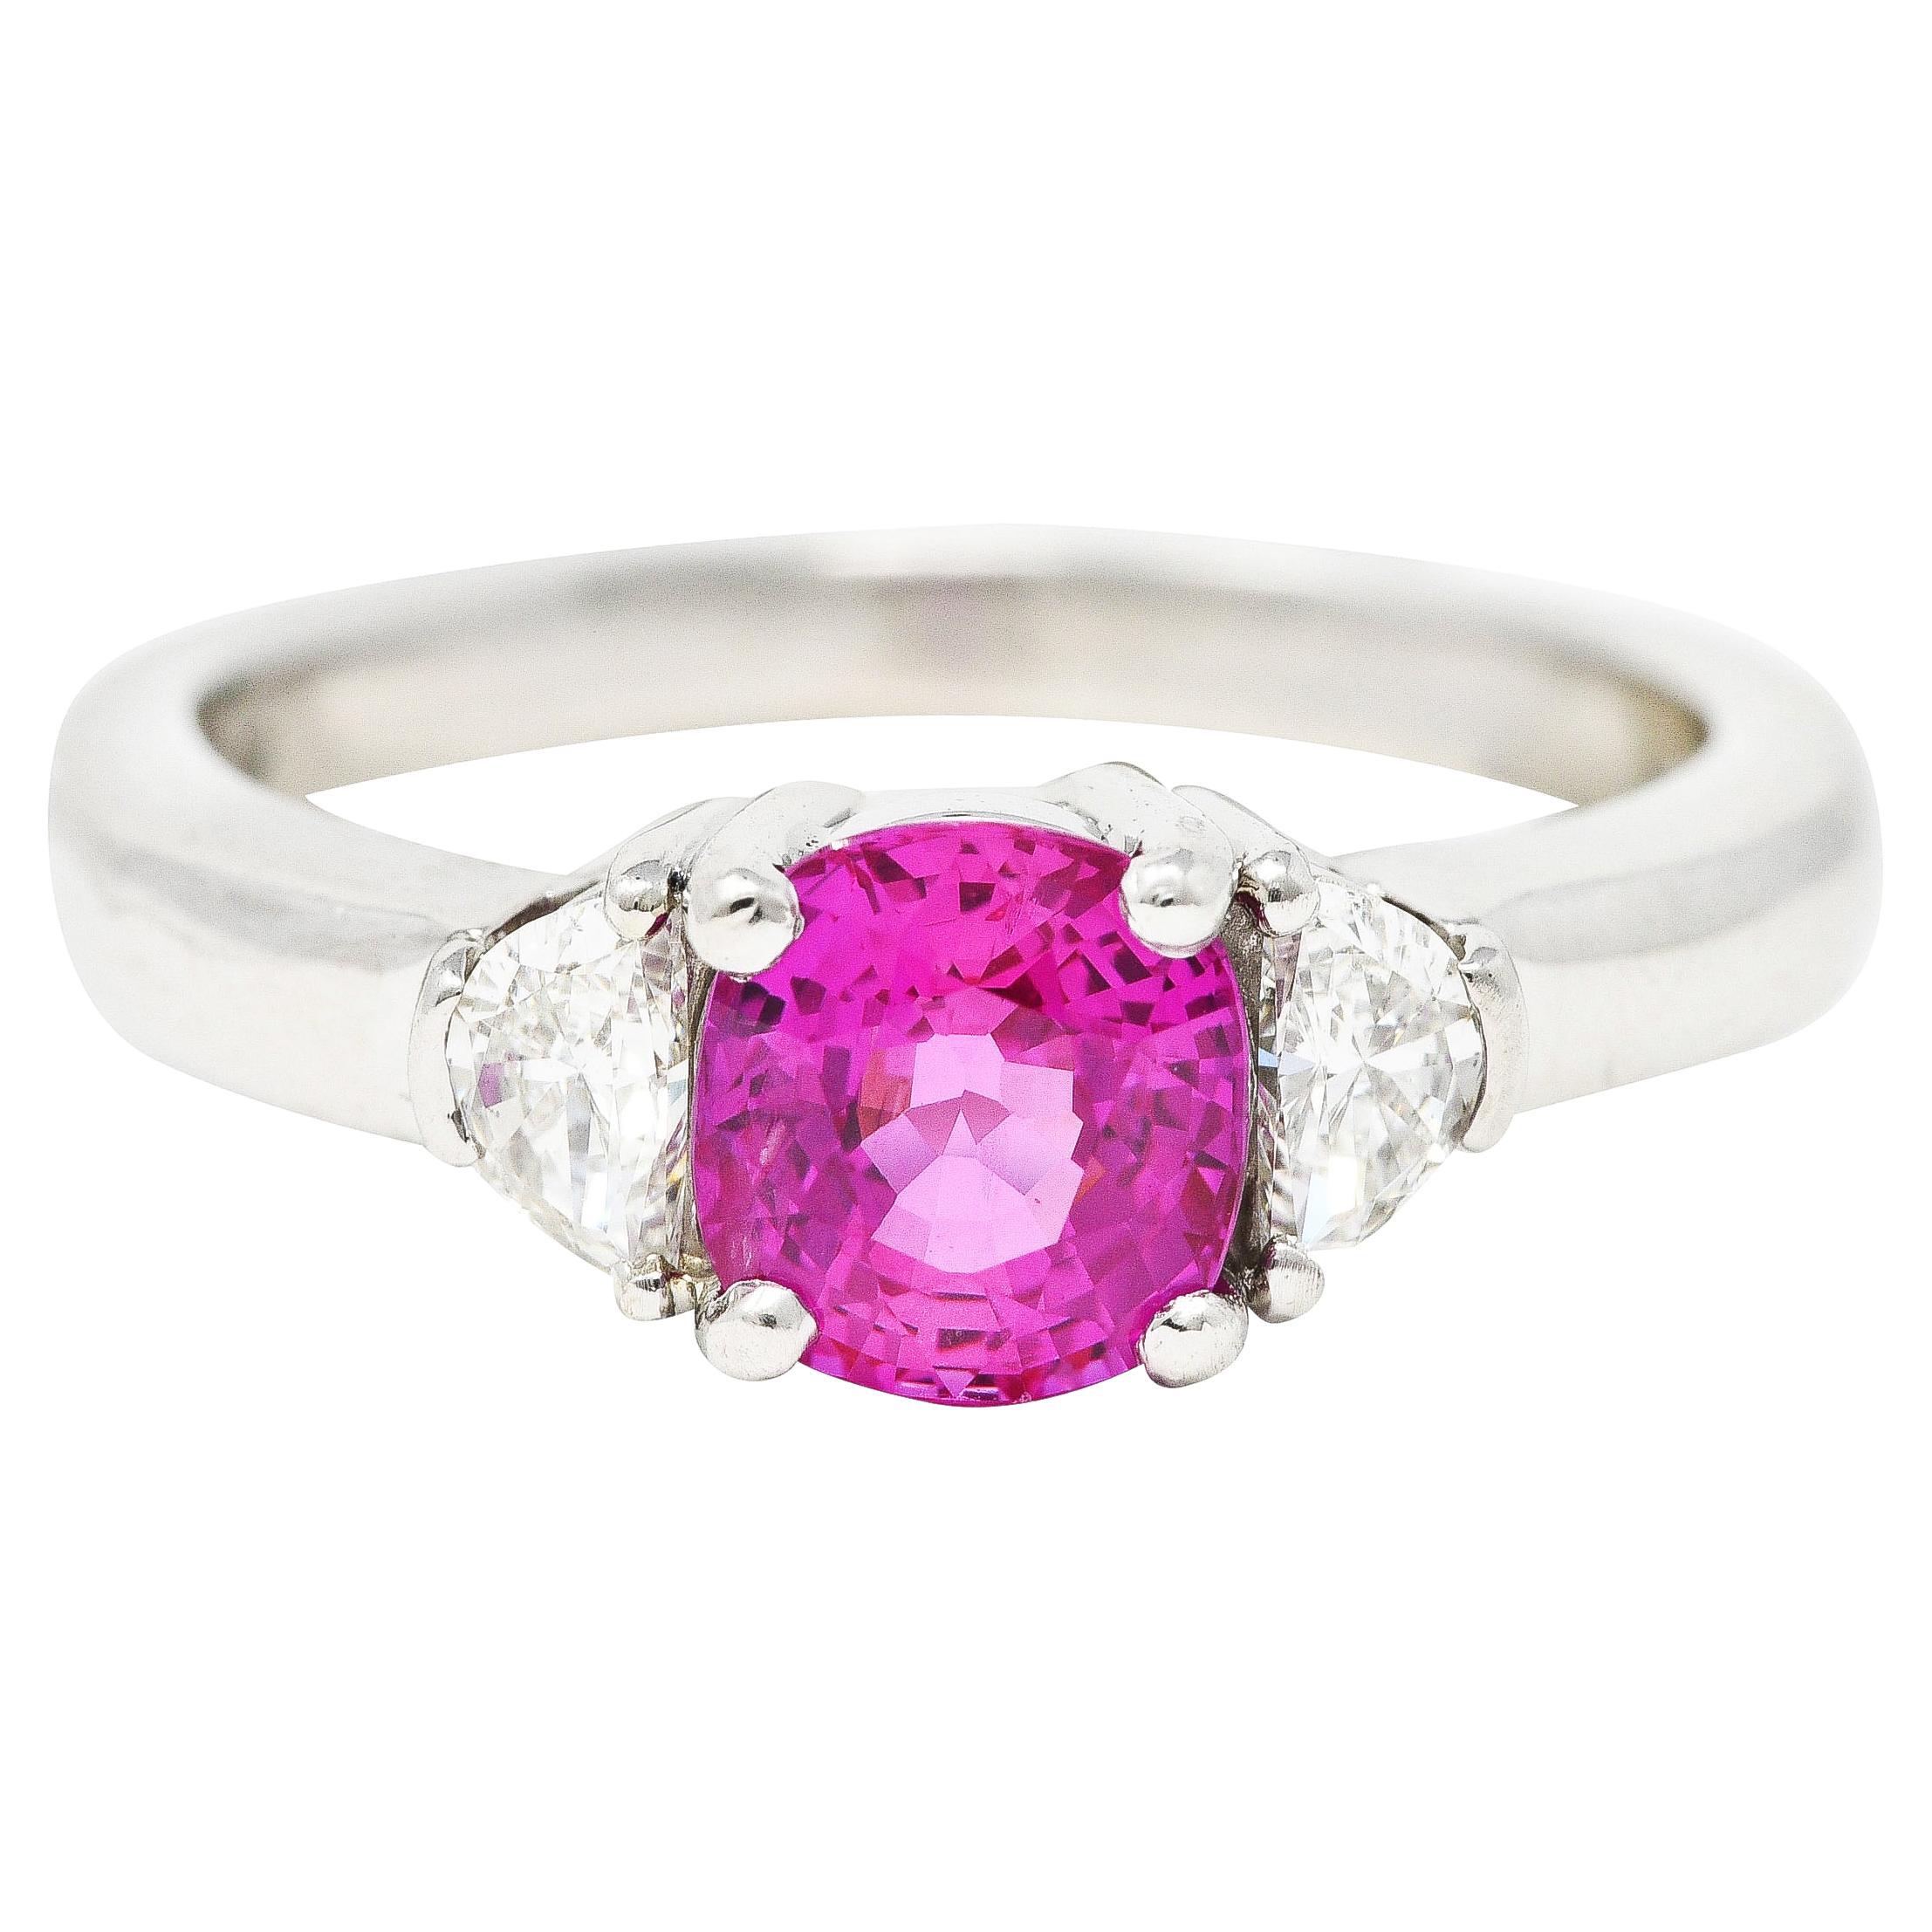 Vintage 1.78 Carats Pink Sapphire Diamond Platinum Three Stone Ring